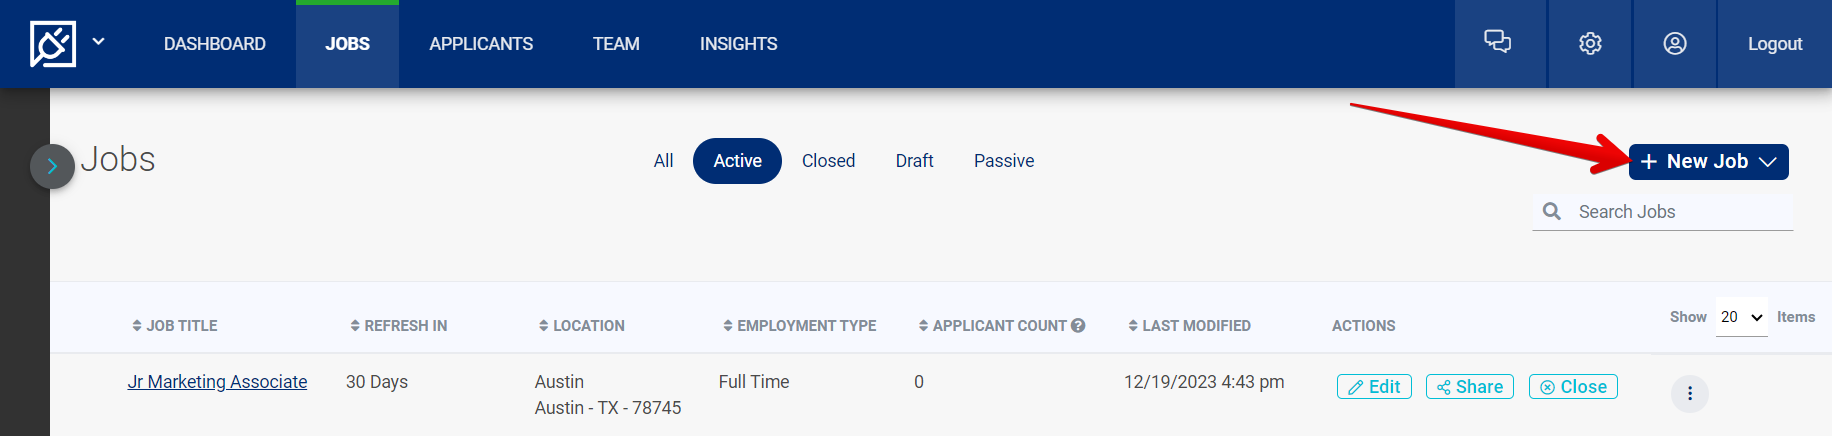 Jobs Page (New Job arrow).png